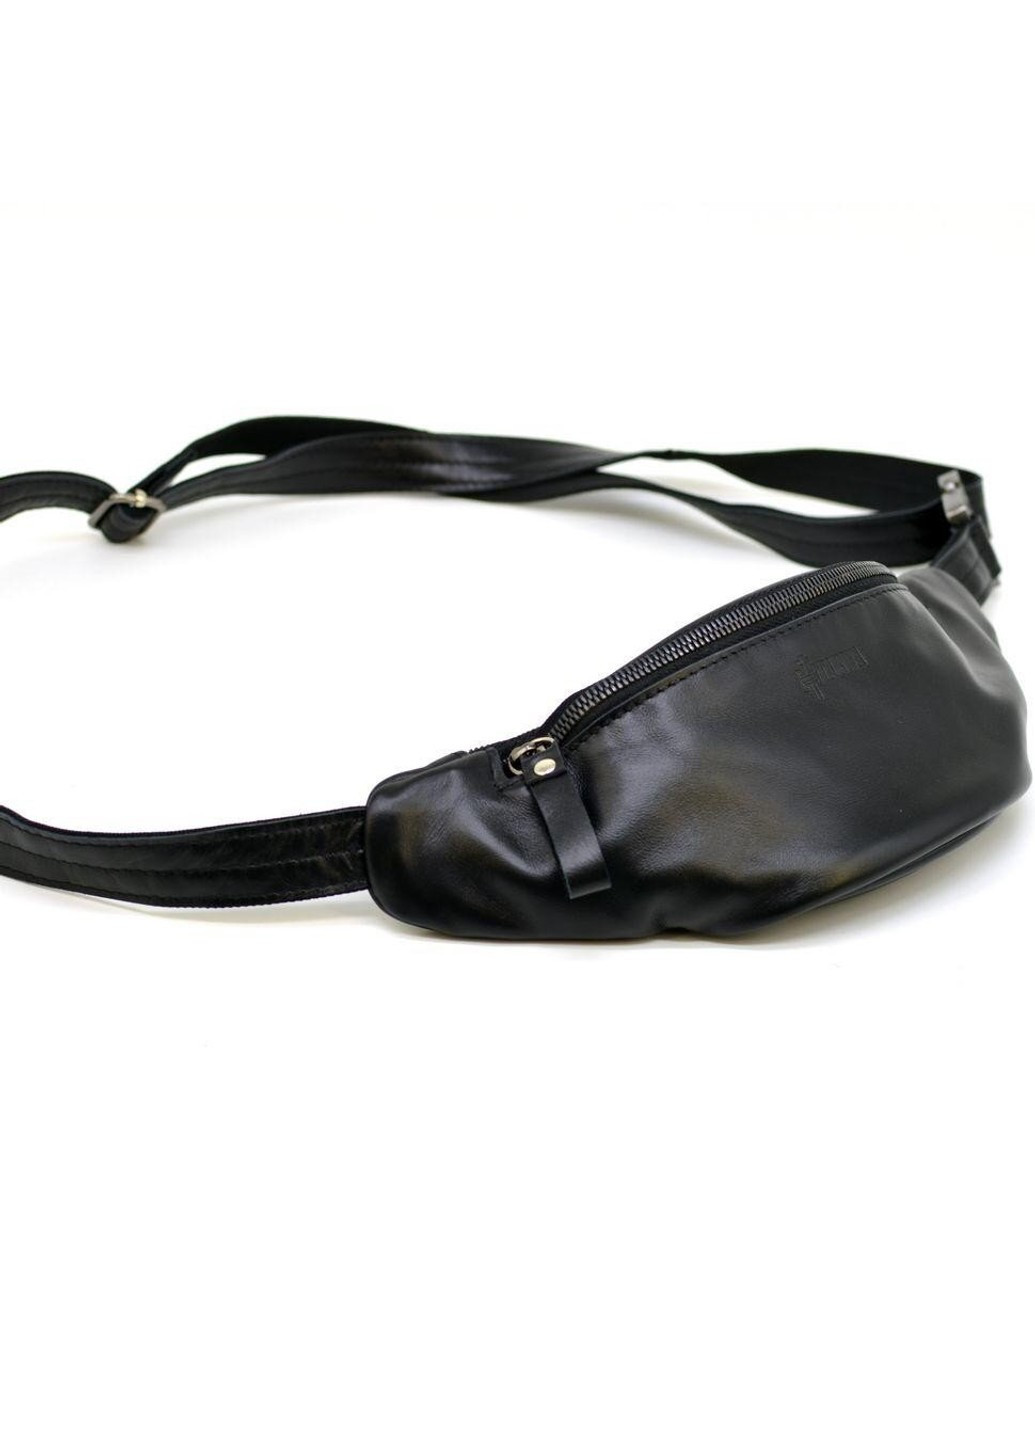 Кожаная черная сумка на пояс унисекс ga-3034-3md TARWA (263776521)